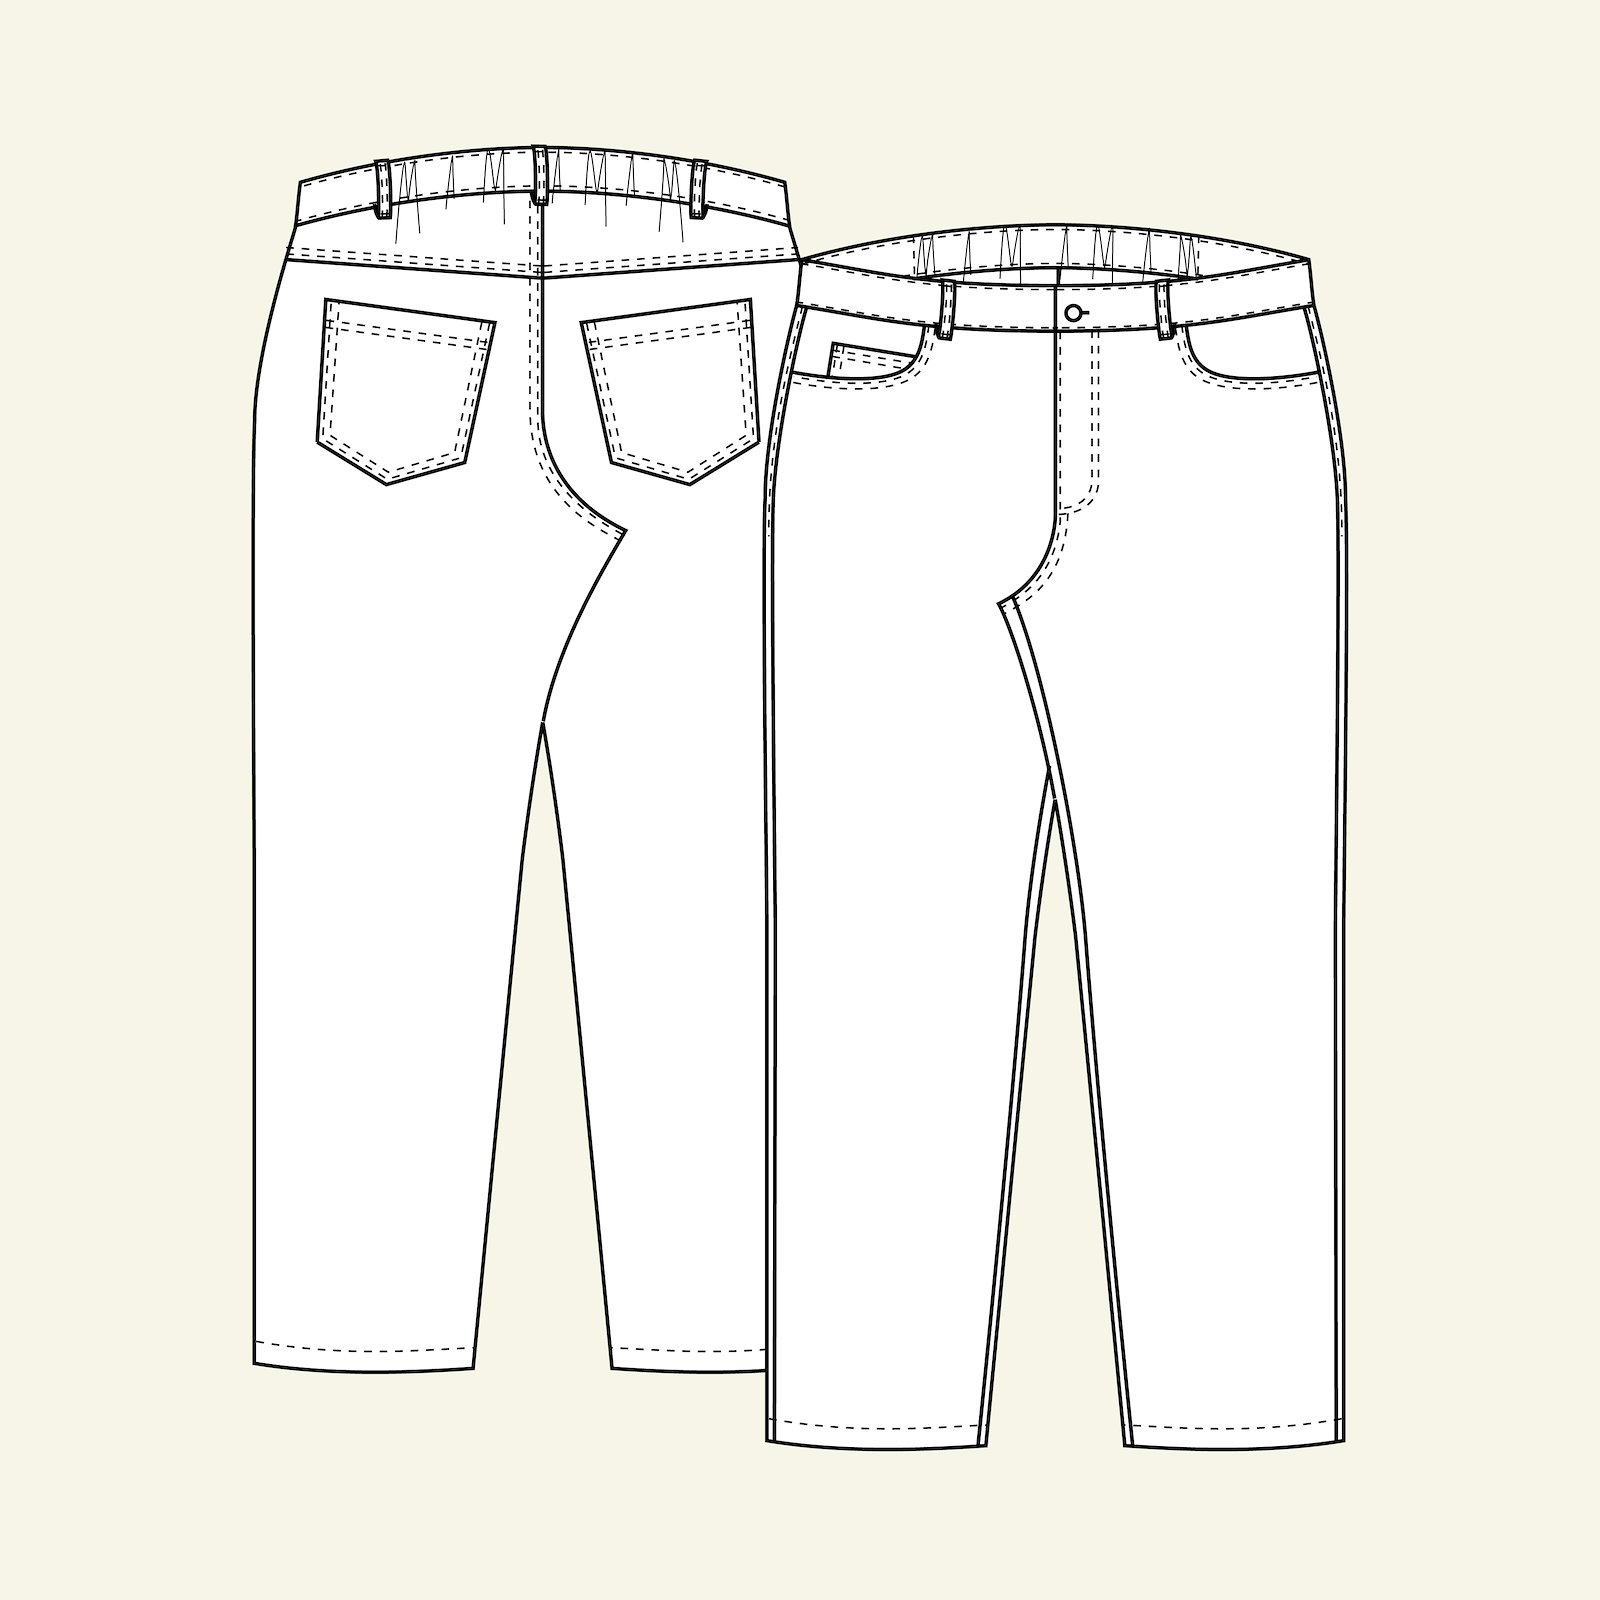 Klassisk jeans med resårlinning bak, 48 p70007000_p70007001_p70007002_p70007003_p70007004_pack_b